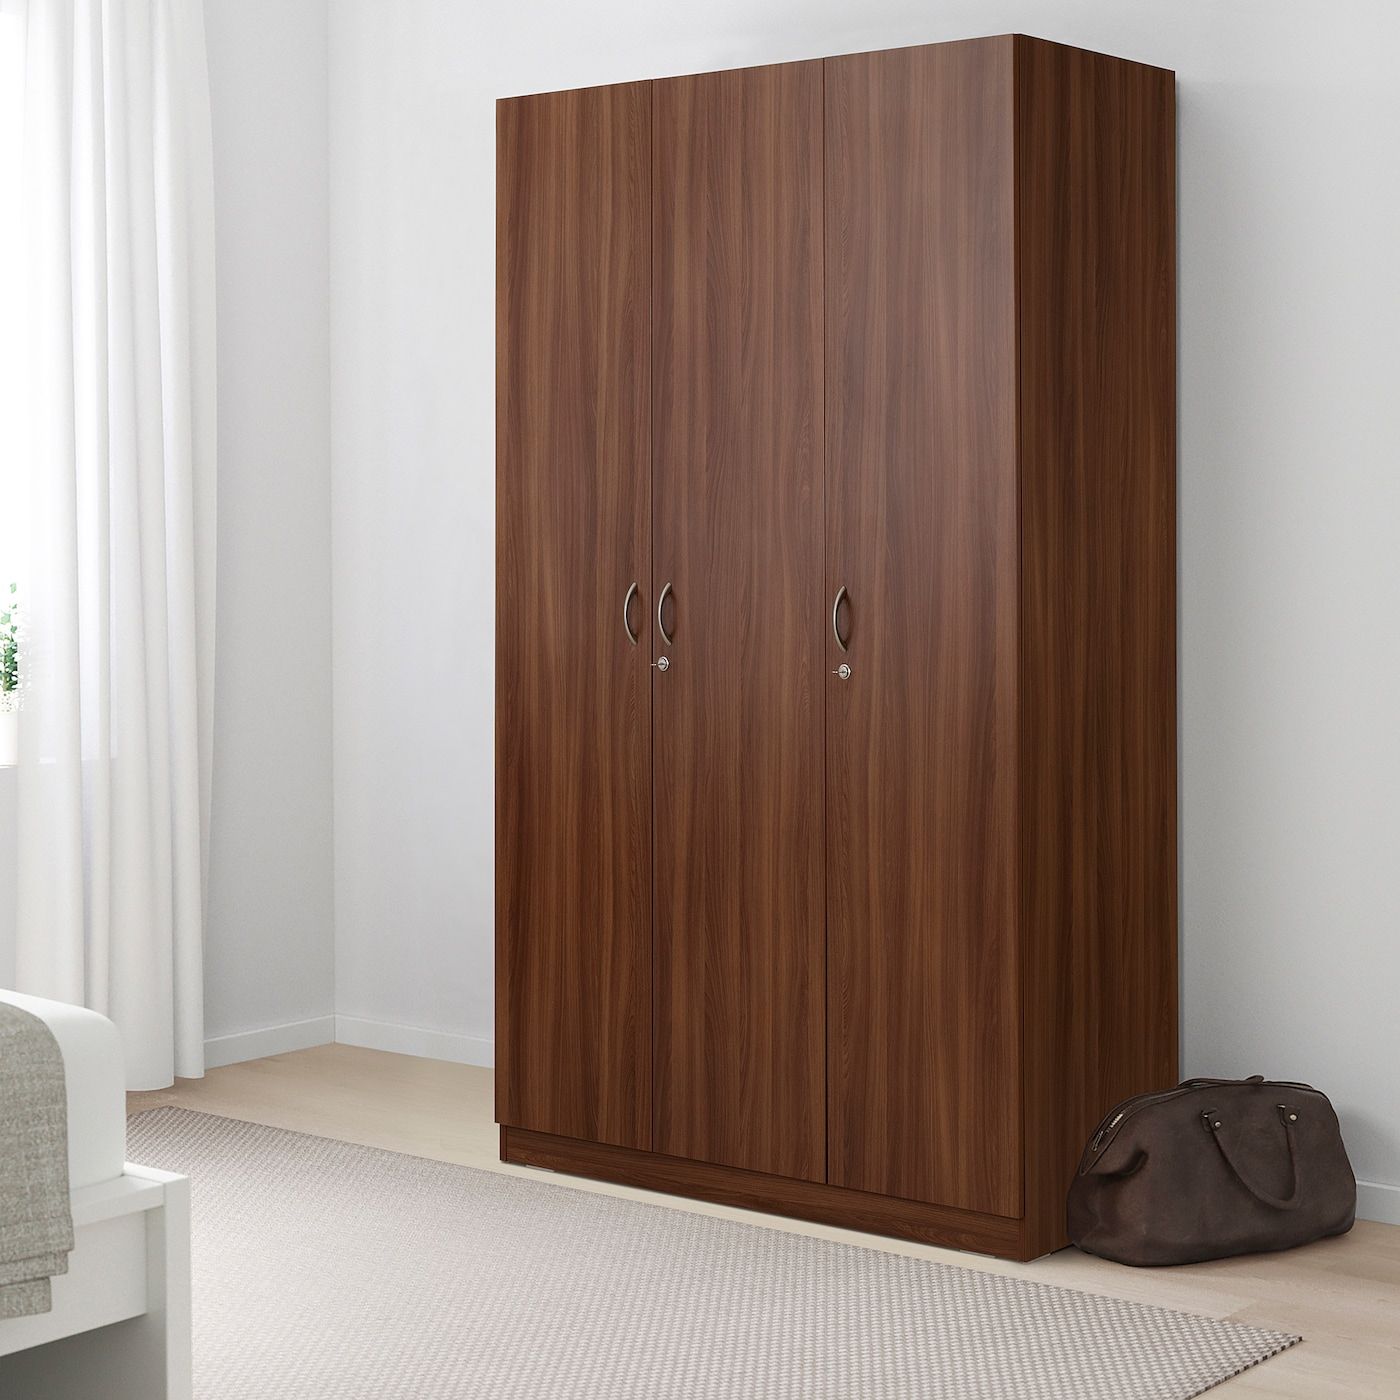 Nodeland Wardrobe With 3 Doors, Medium Brown, 120x52x202 Cm  (471/4x203/8x791/2") – Ikea Within Medium Size Wardrobes (View 10 of 15)